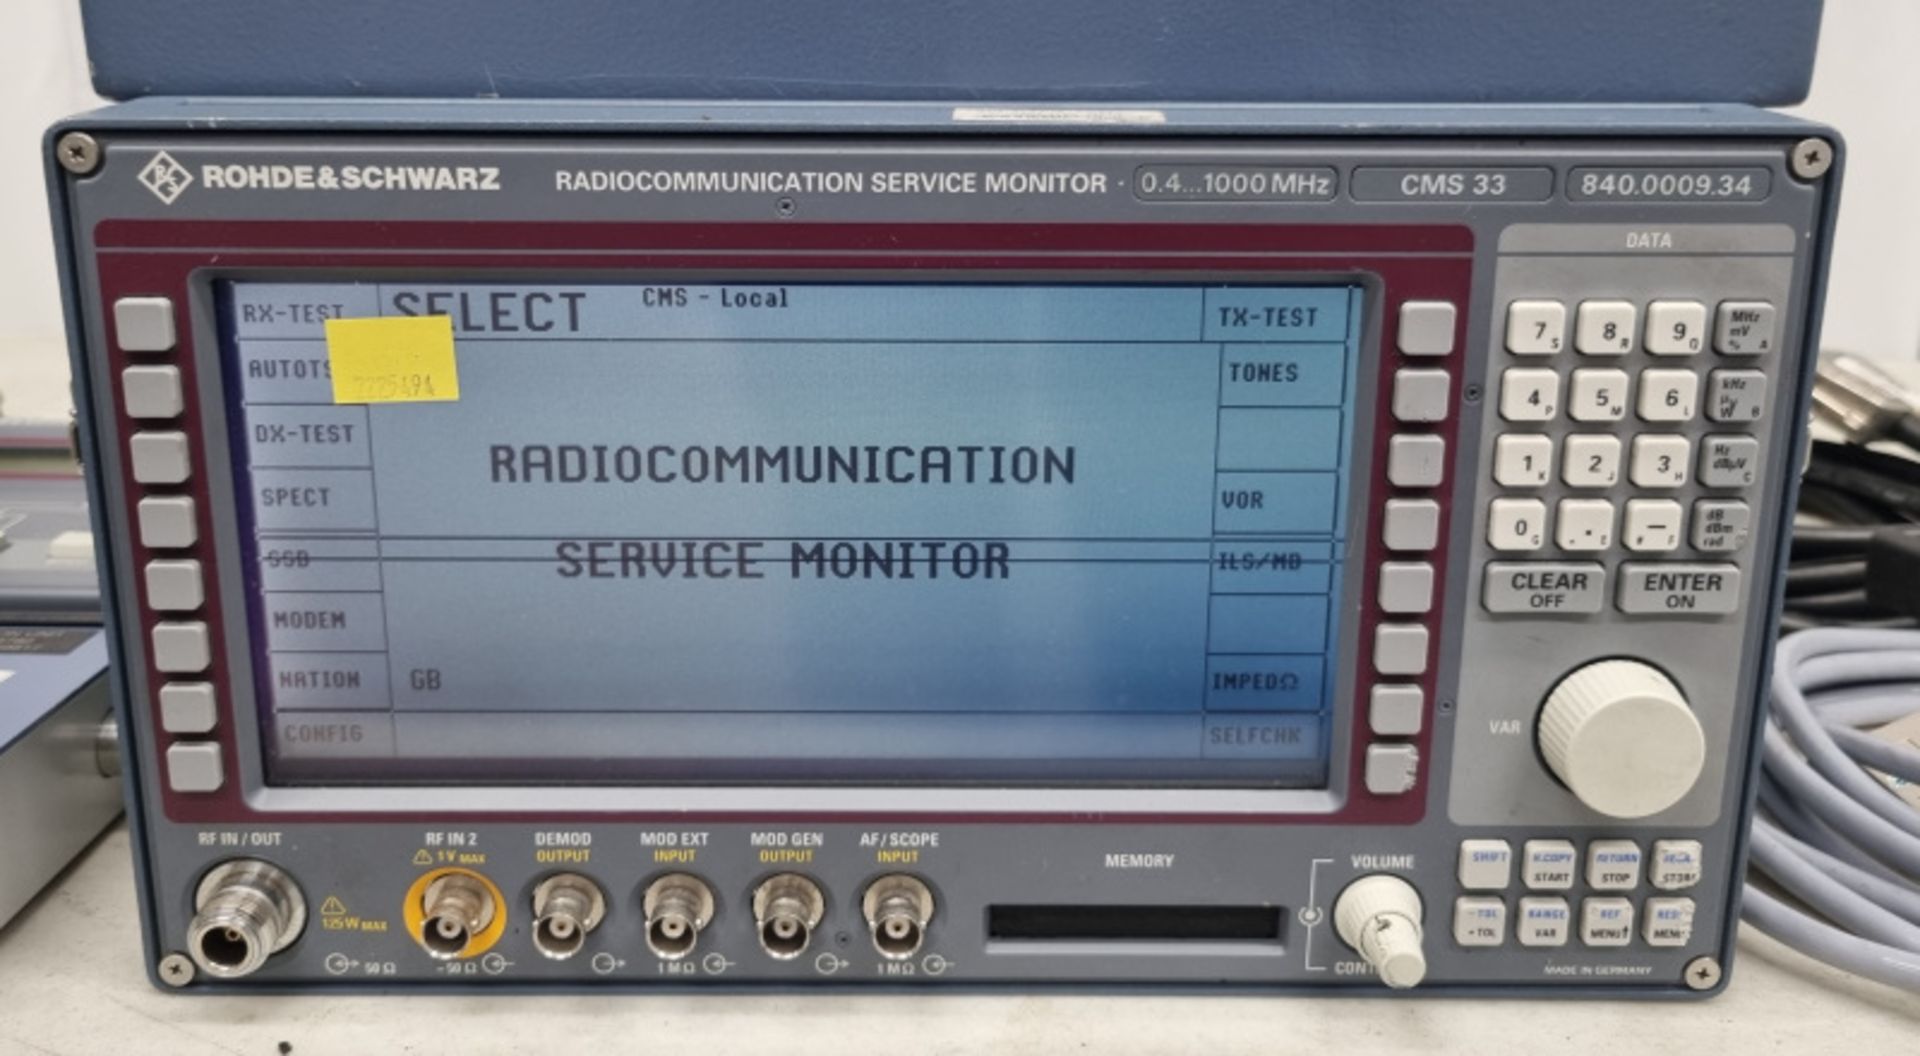 Rohde & Schwarz CMS33 Radiocommunication Service Monitor 0.4 - 1000mhz - 840.0009.34 - Image 4 of 9